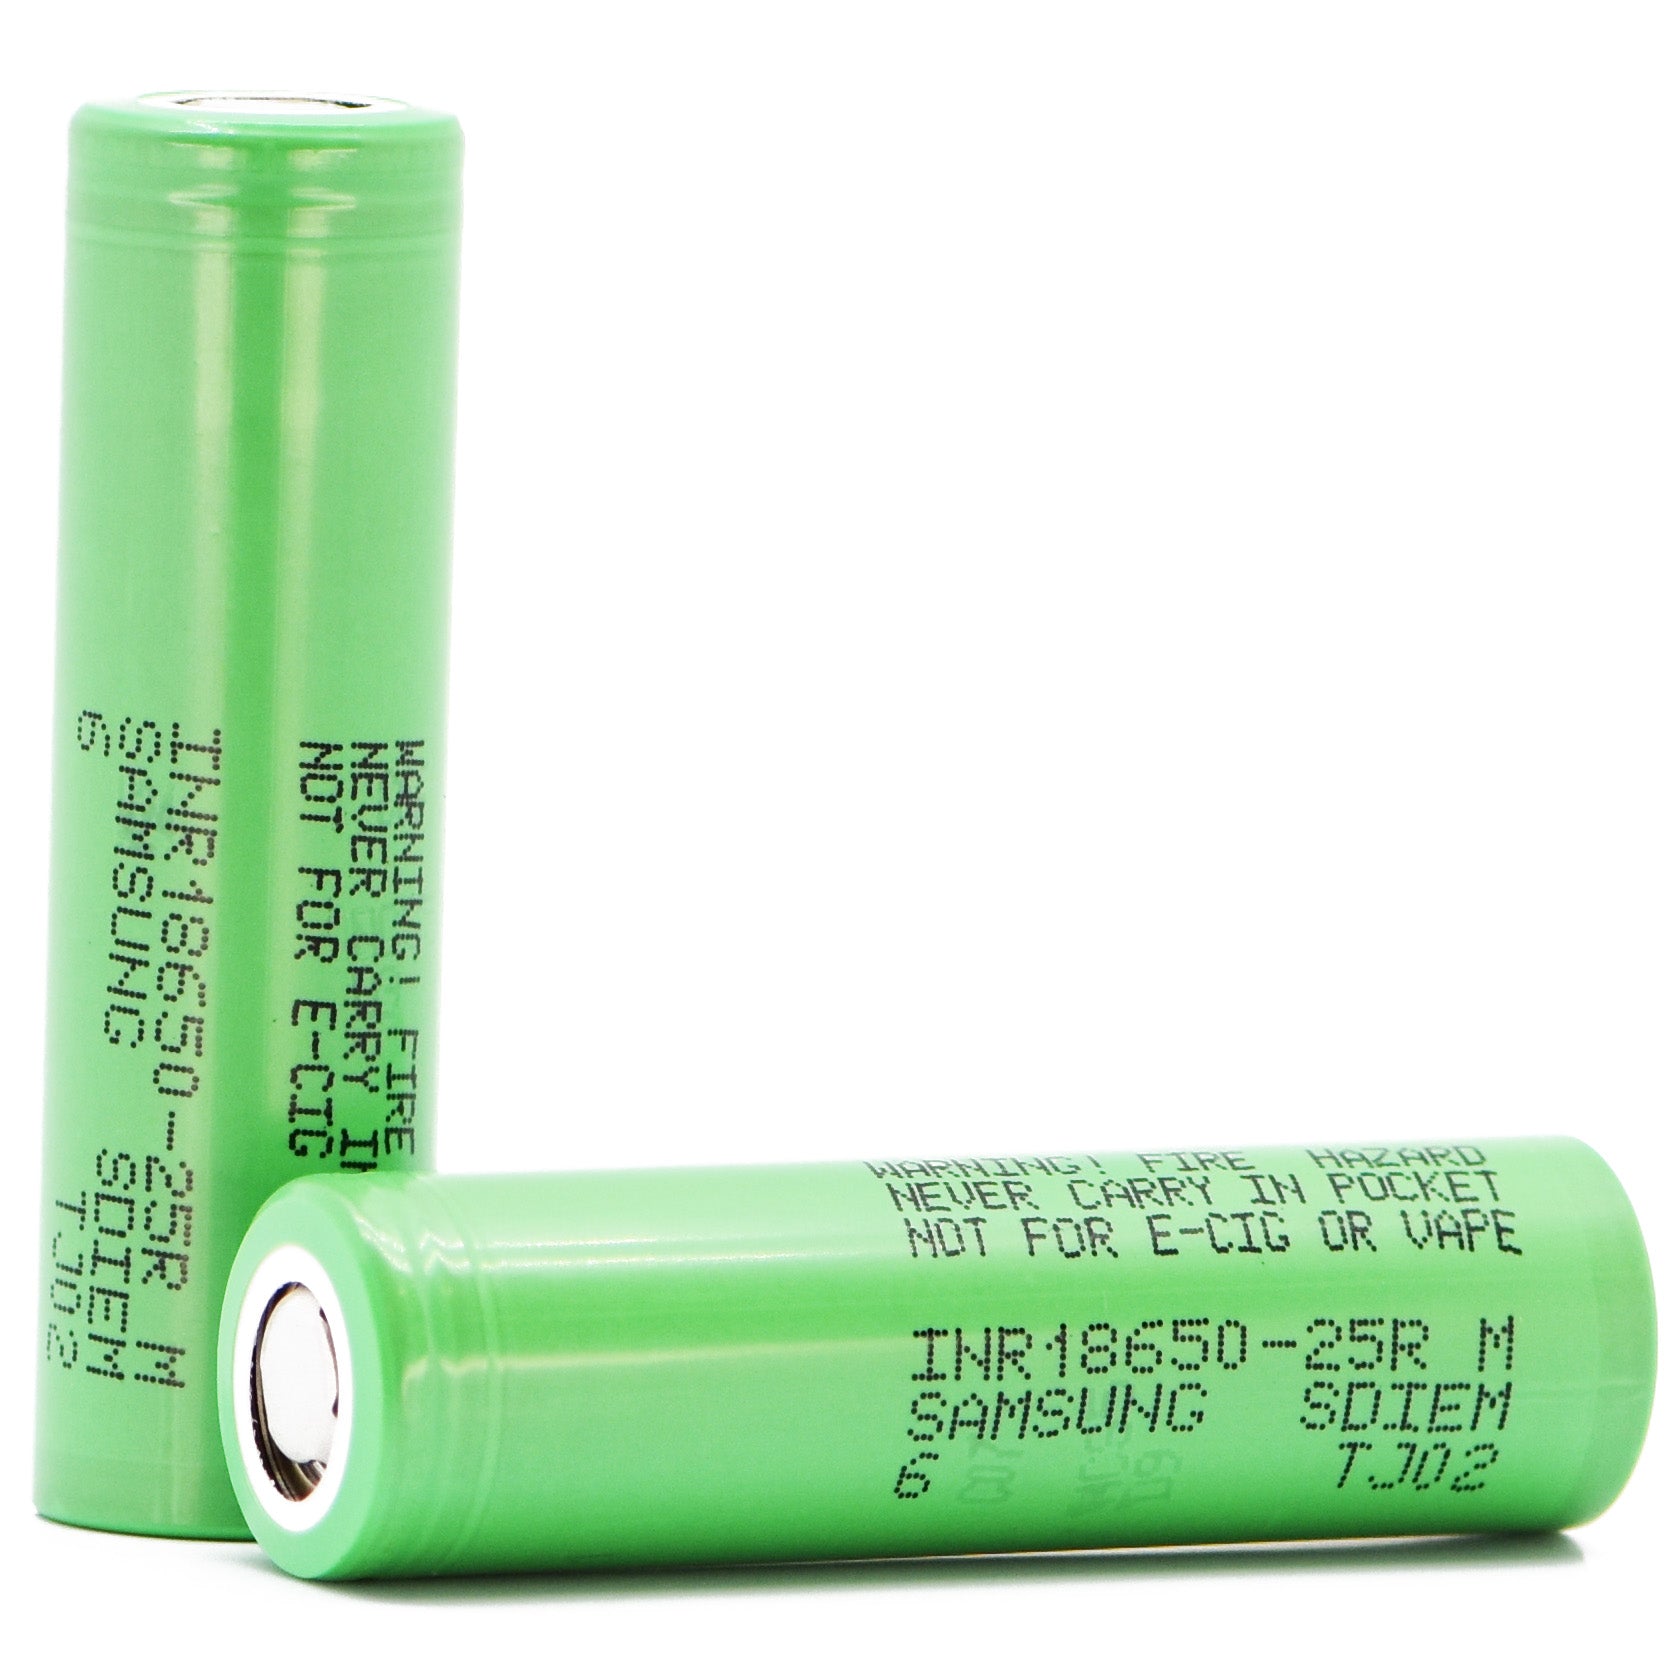 18650 Batteries for Sale - 3.7V Li-Ion Rechargeable Cells